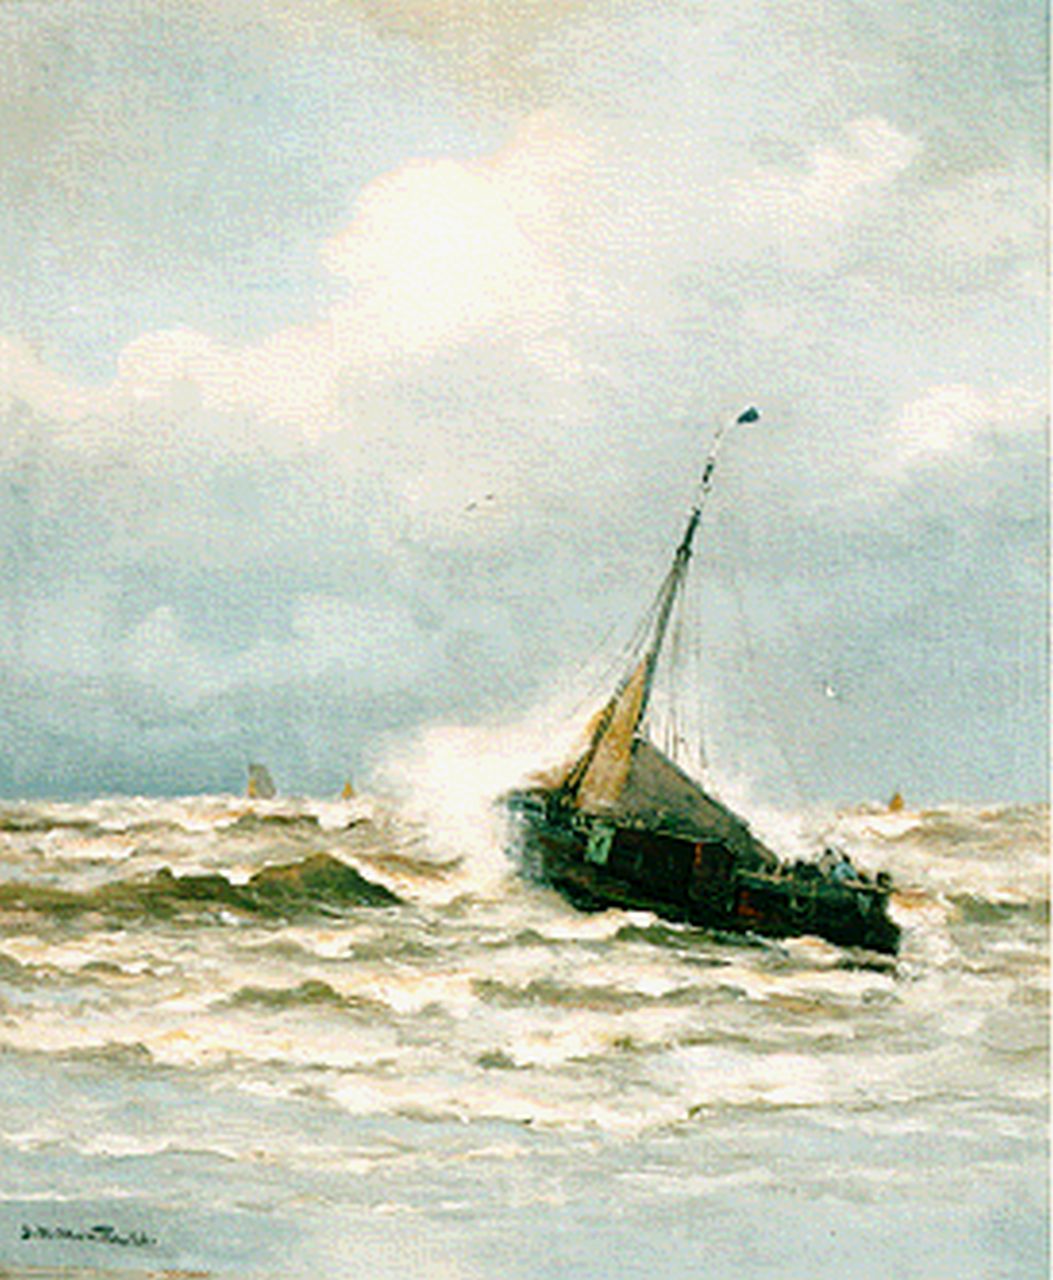 Munthe G.A.L.  | Gerhard Arij Ludwig 'Morgenstjerne' Munthe, Vissersboot in de branding, olieverf op doek 75,6 x 63,5 cm, gesigneerd linksonder en gedateerd '26